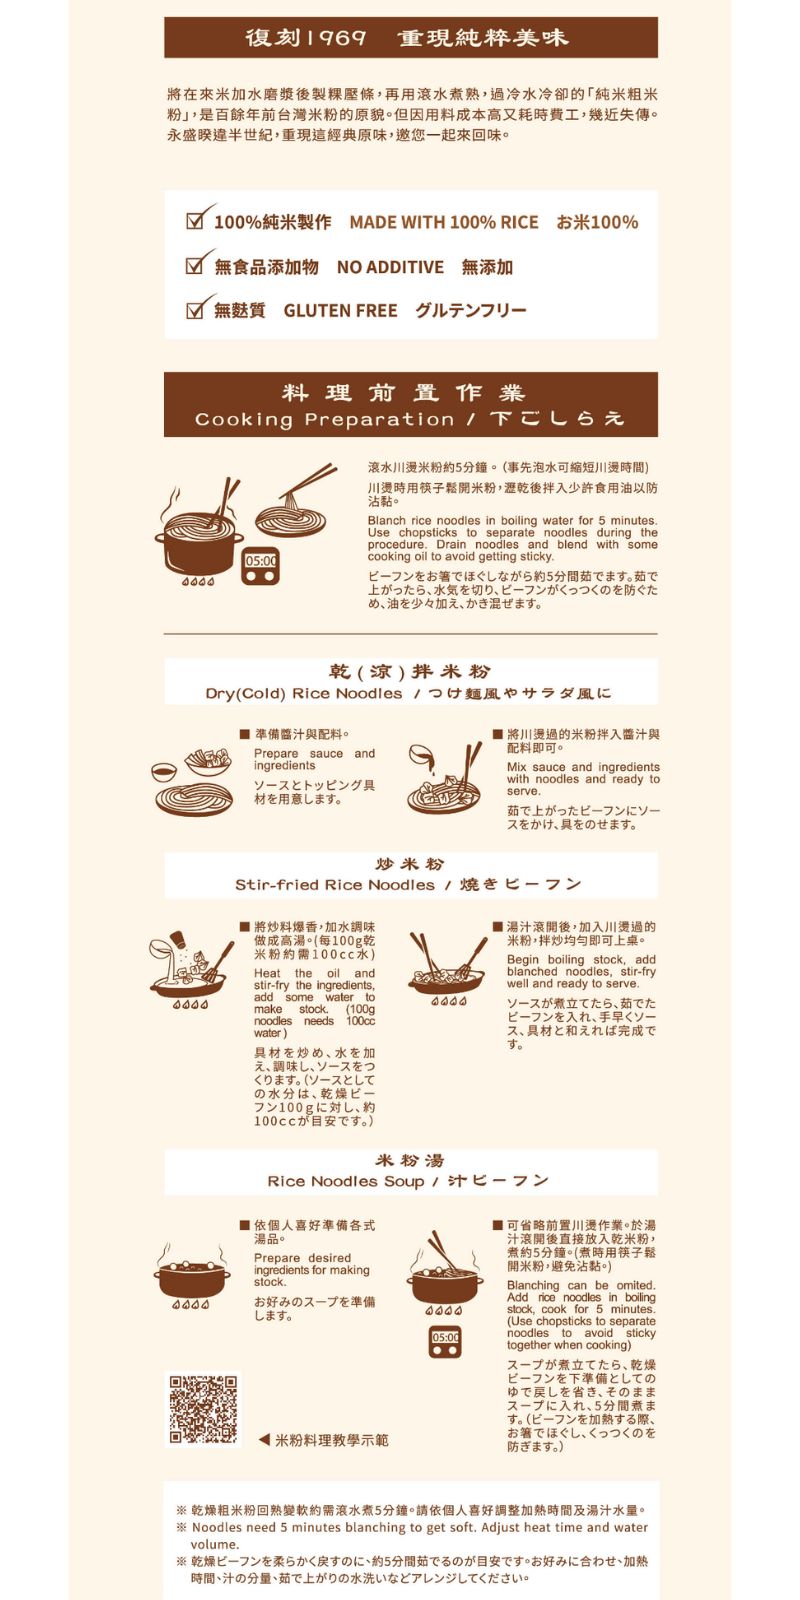 #6004 永盛粗米粉-白米 Yung Shen Thick Rice Noodles (里仁) 600g, 10/cs